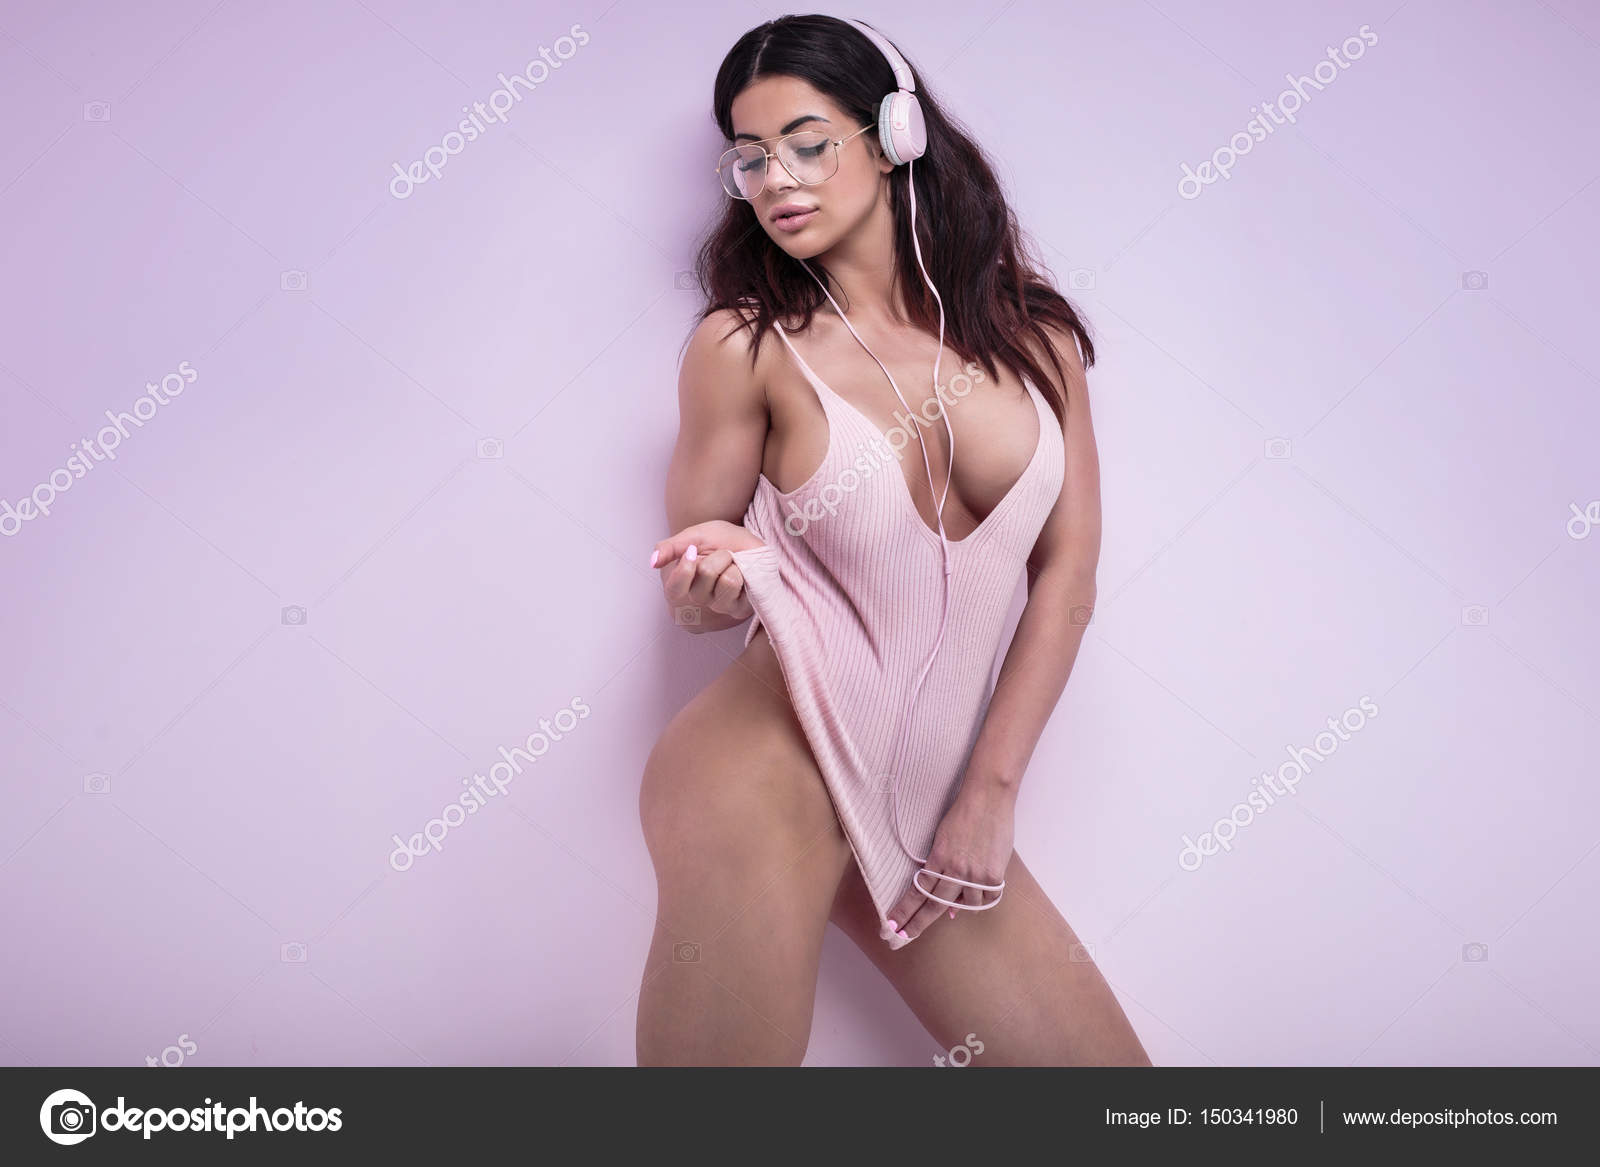 Erotic women background